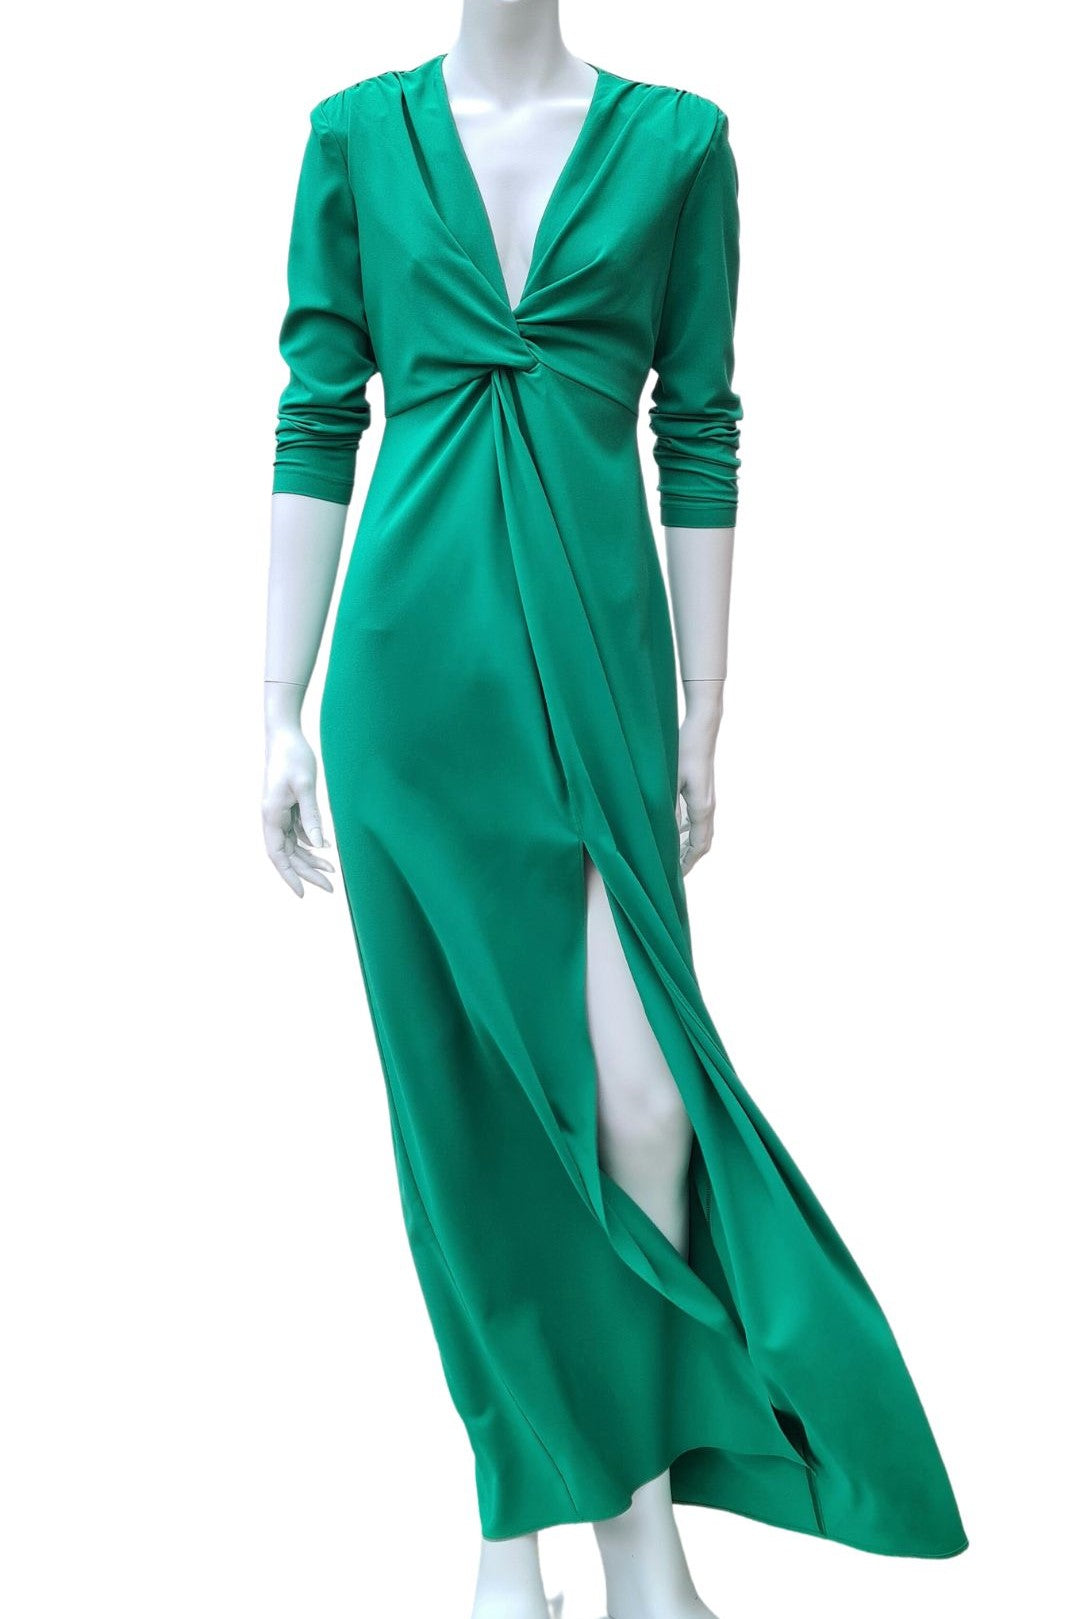 Maxi jurk groen hoge split